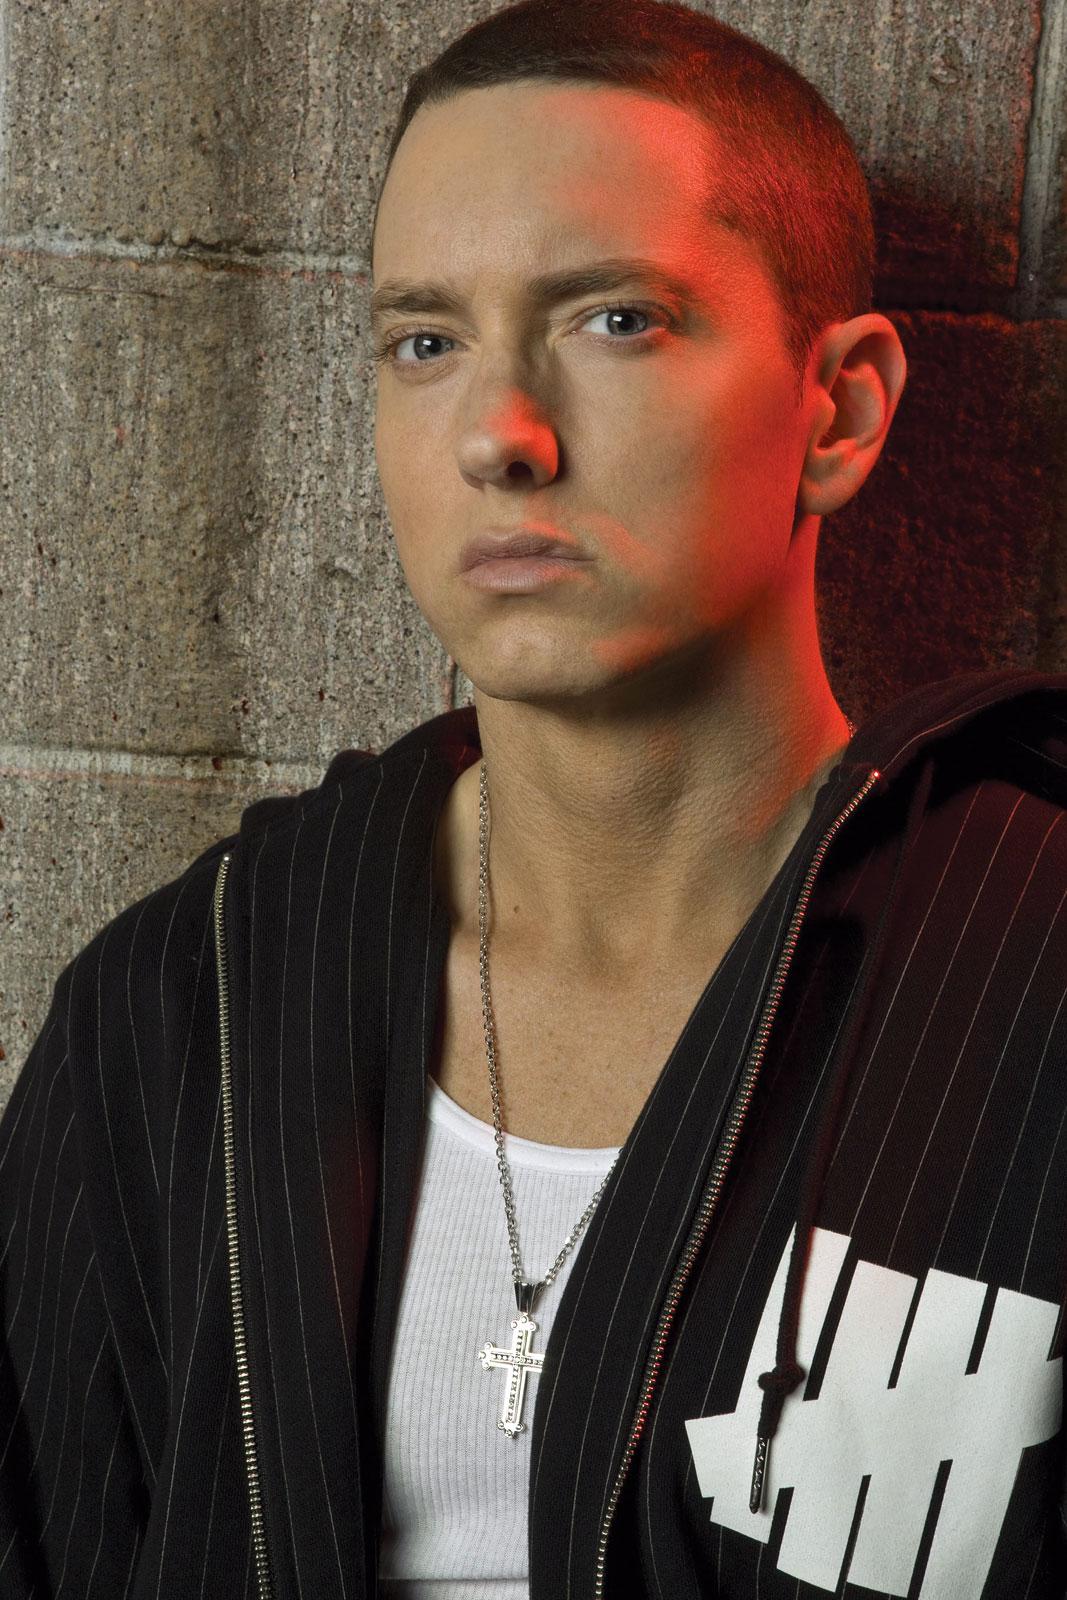 Eminem. Biography, Music, Awards, & Facts